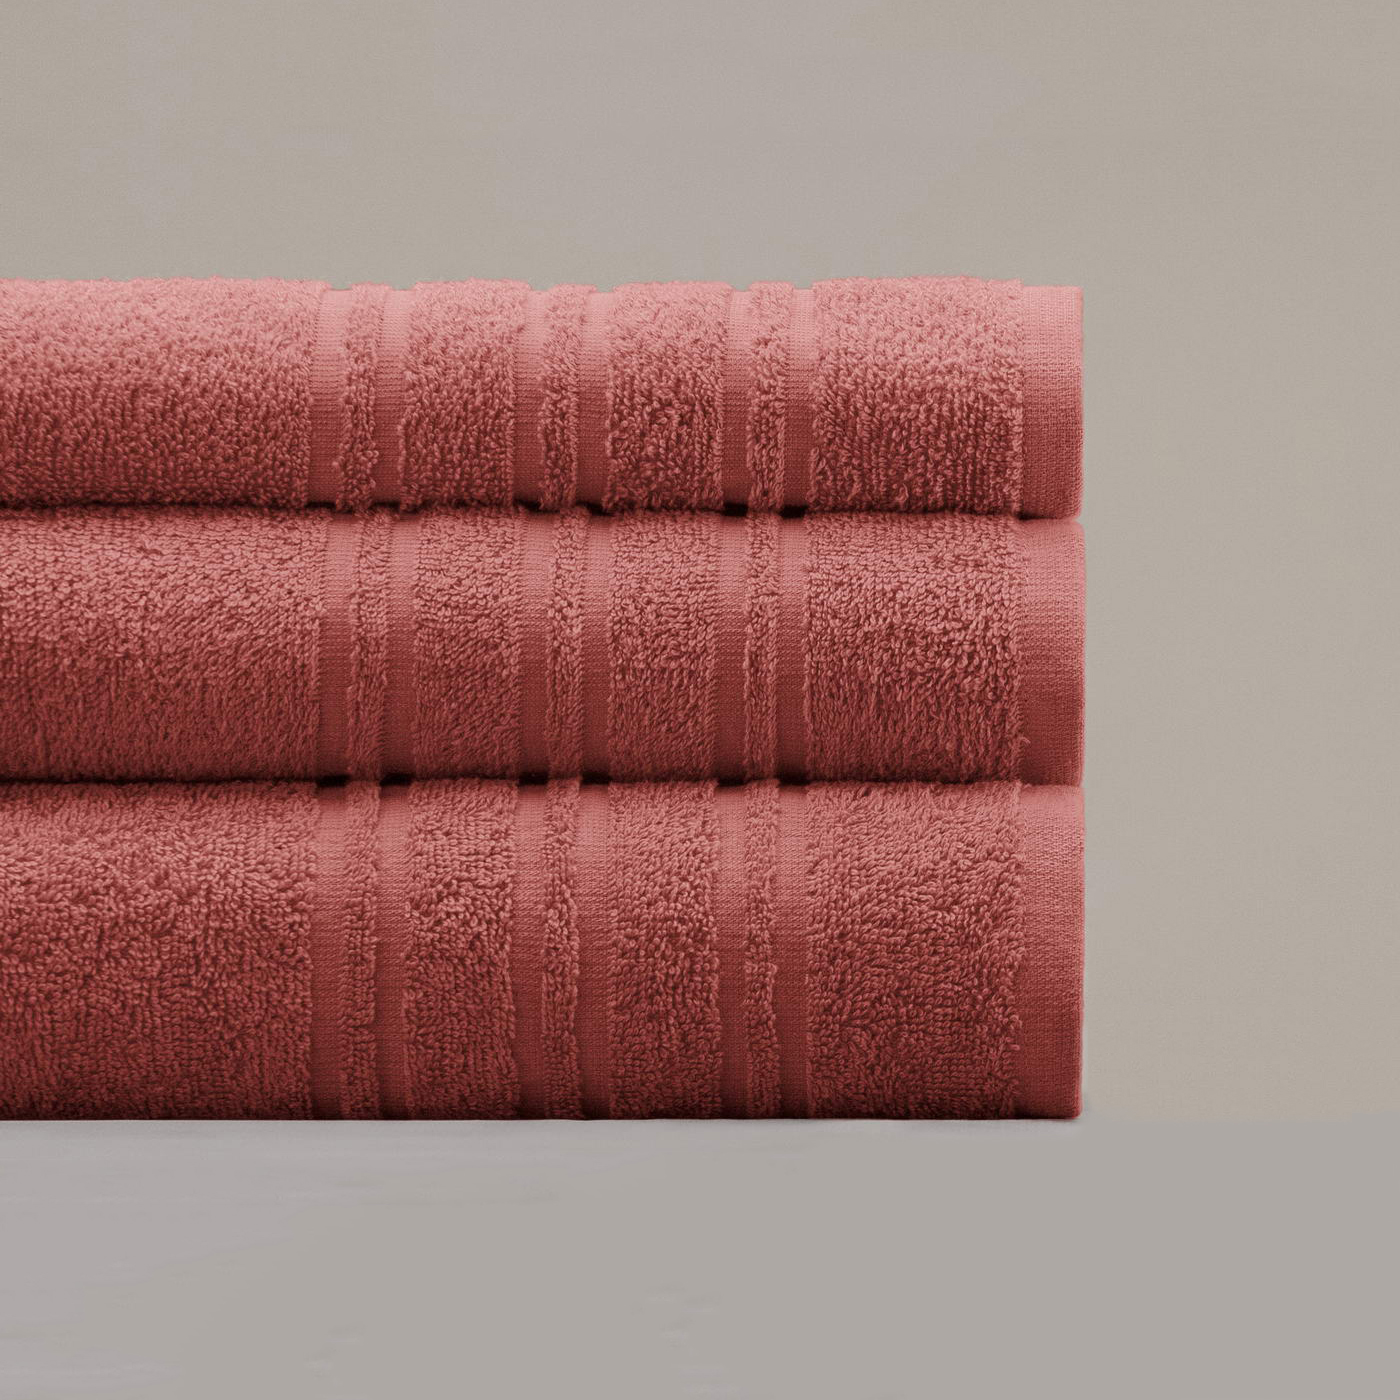 Полотенце Monica цвет: пыльно-розовый (50х90 см), размер 50х90 см sofi790508 Полотенце Monica цвет: пыльно-розовый (50х90 см) - фото 1